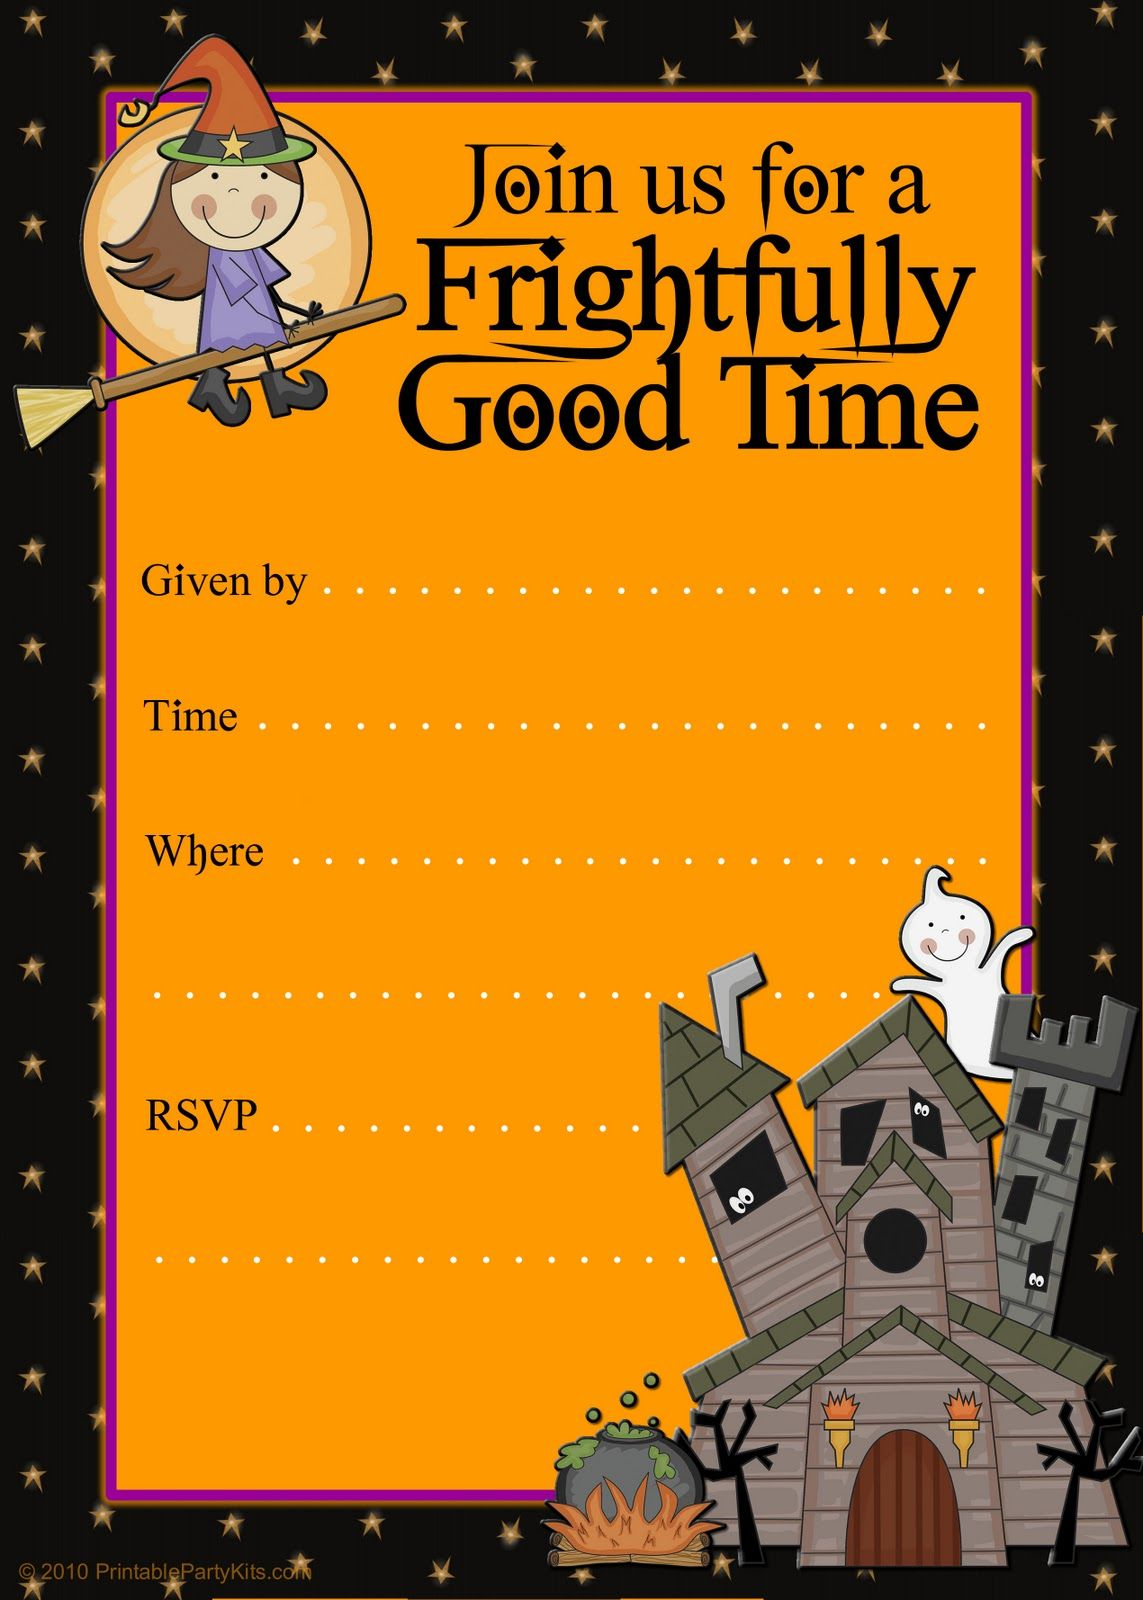 Free Halloween Flyer Invitations Printable | Food | Pinterest - Free Printable Halloween Invitations For Adults